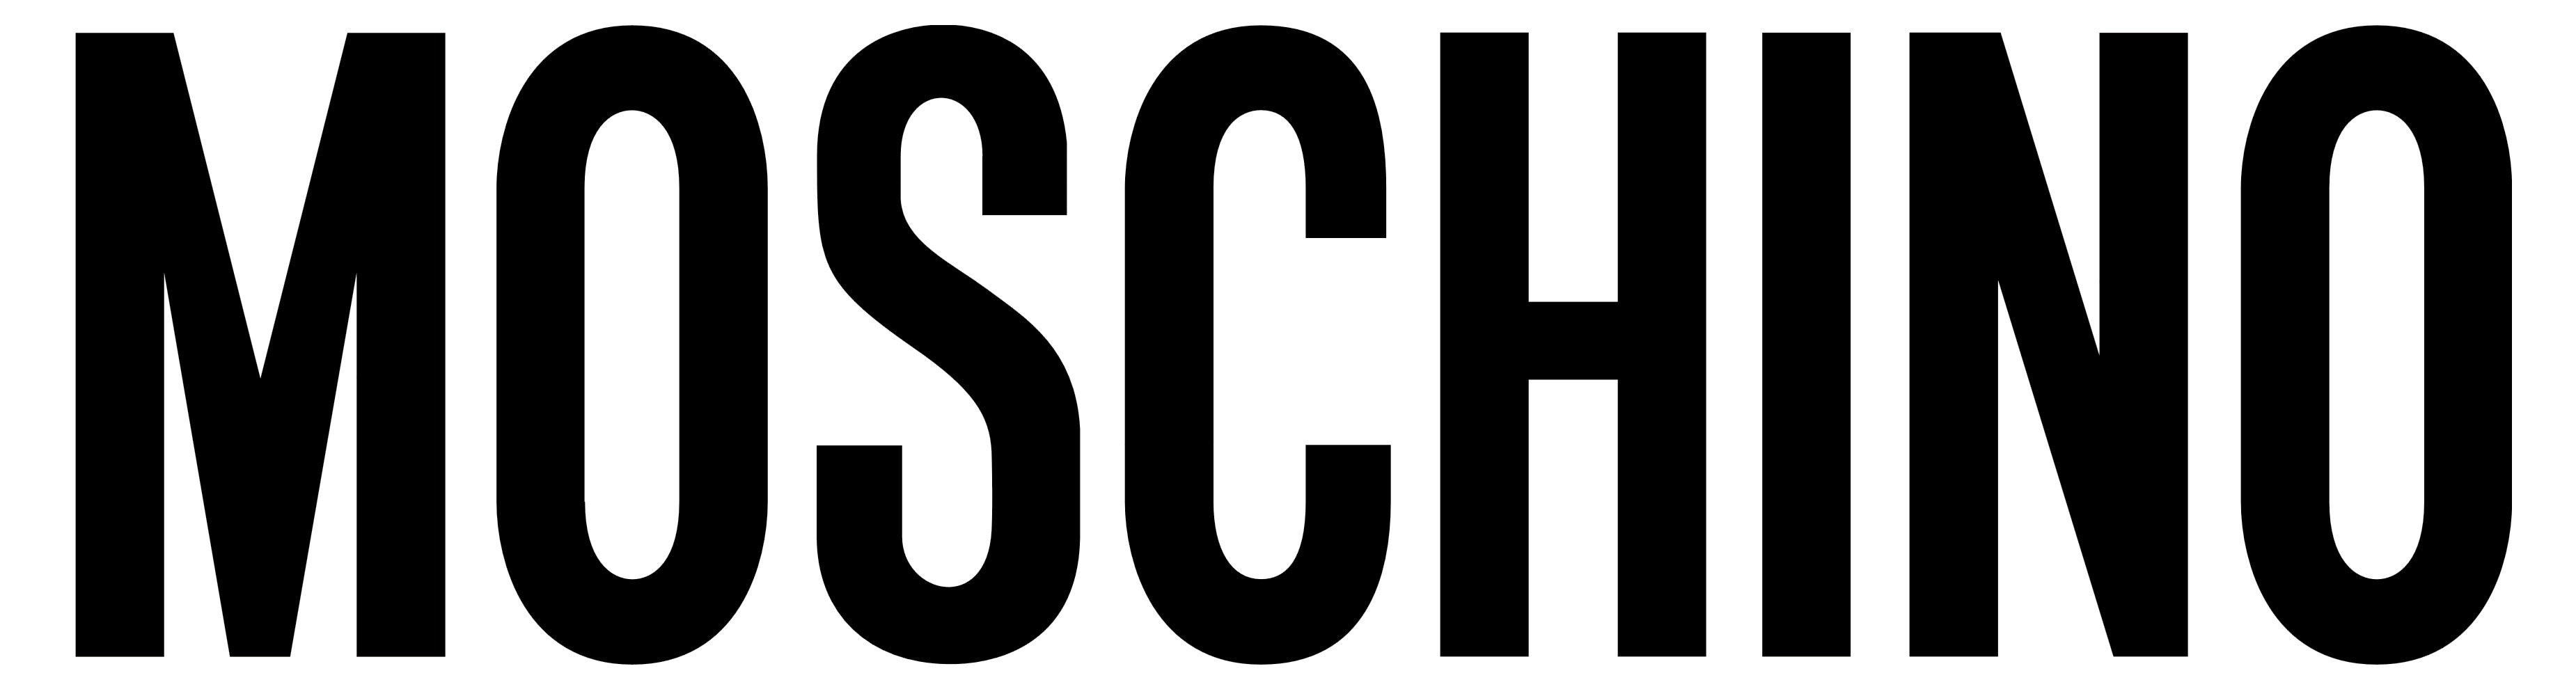 Moschino logo, logotype